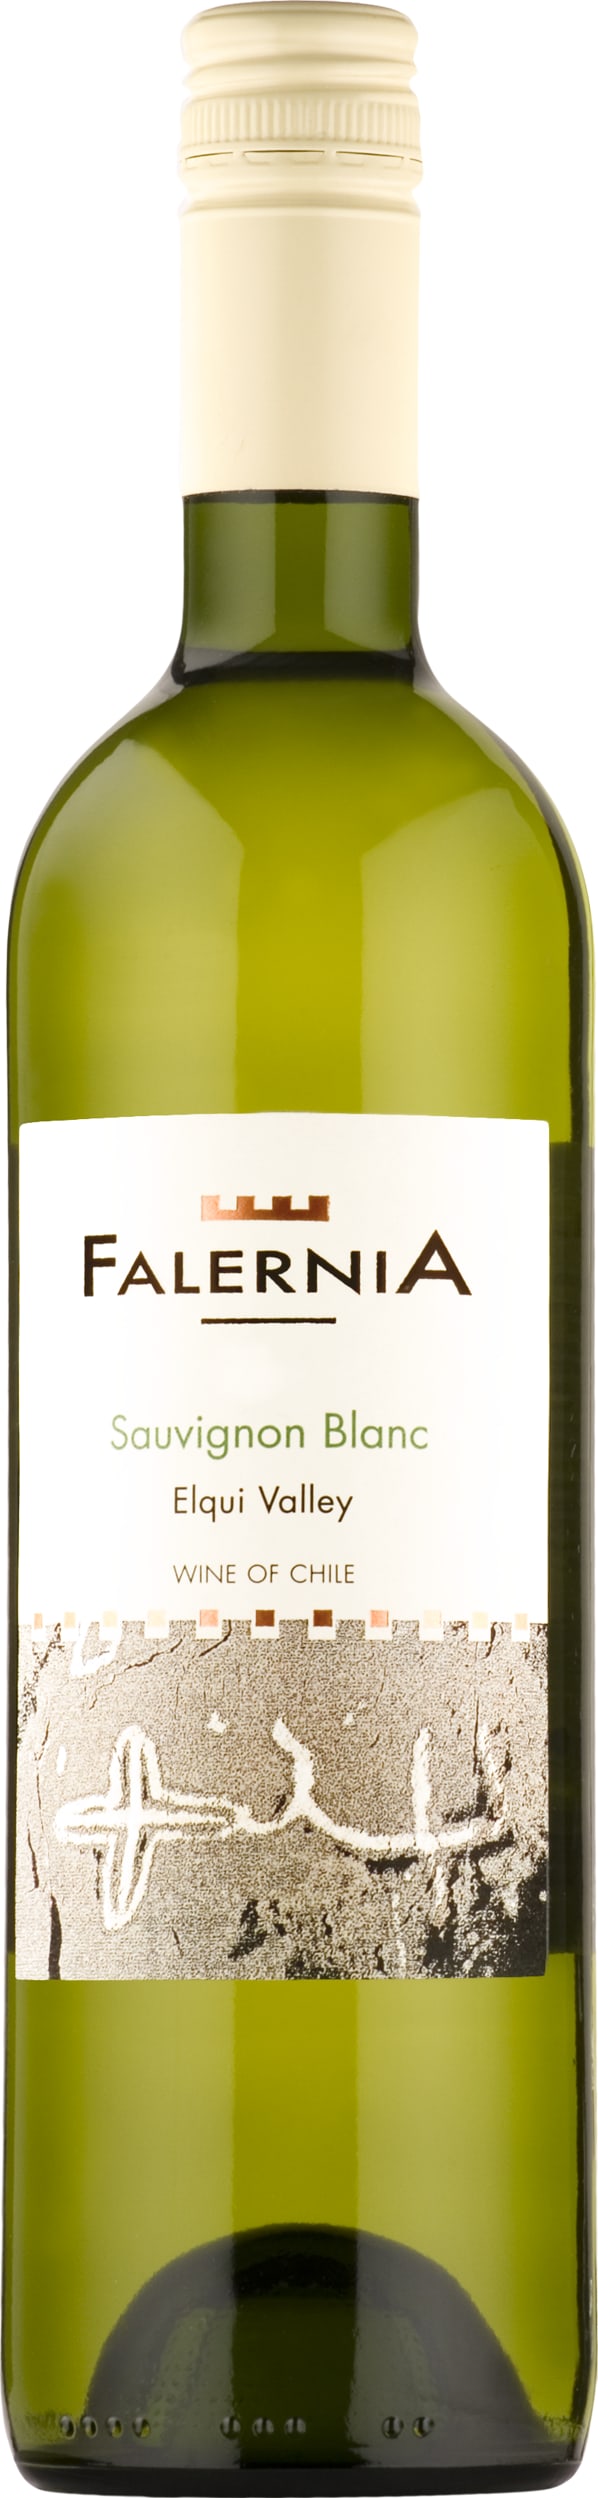 Vina Falernia Sauvignon Blanc Reserva 2021 75cl - Buy Vina Falernia Wines from GREAT WINES DIRECT wine shop